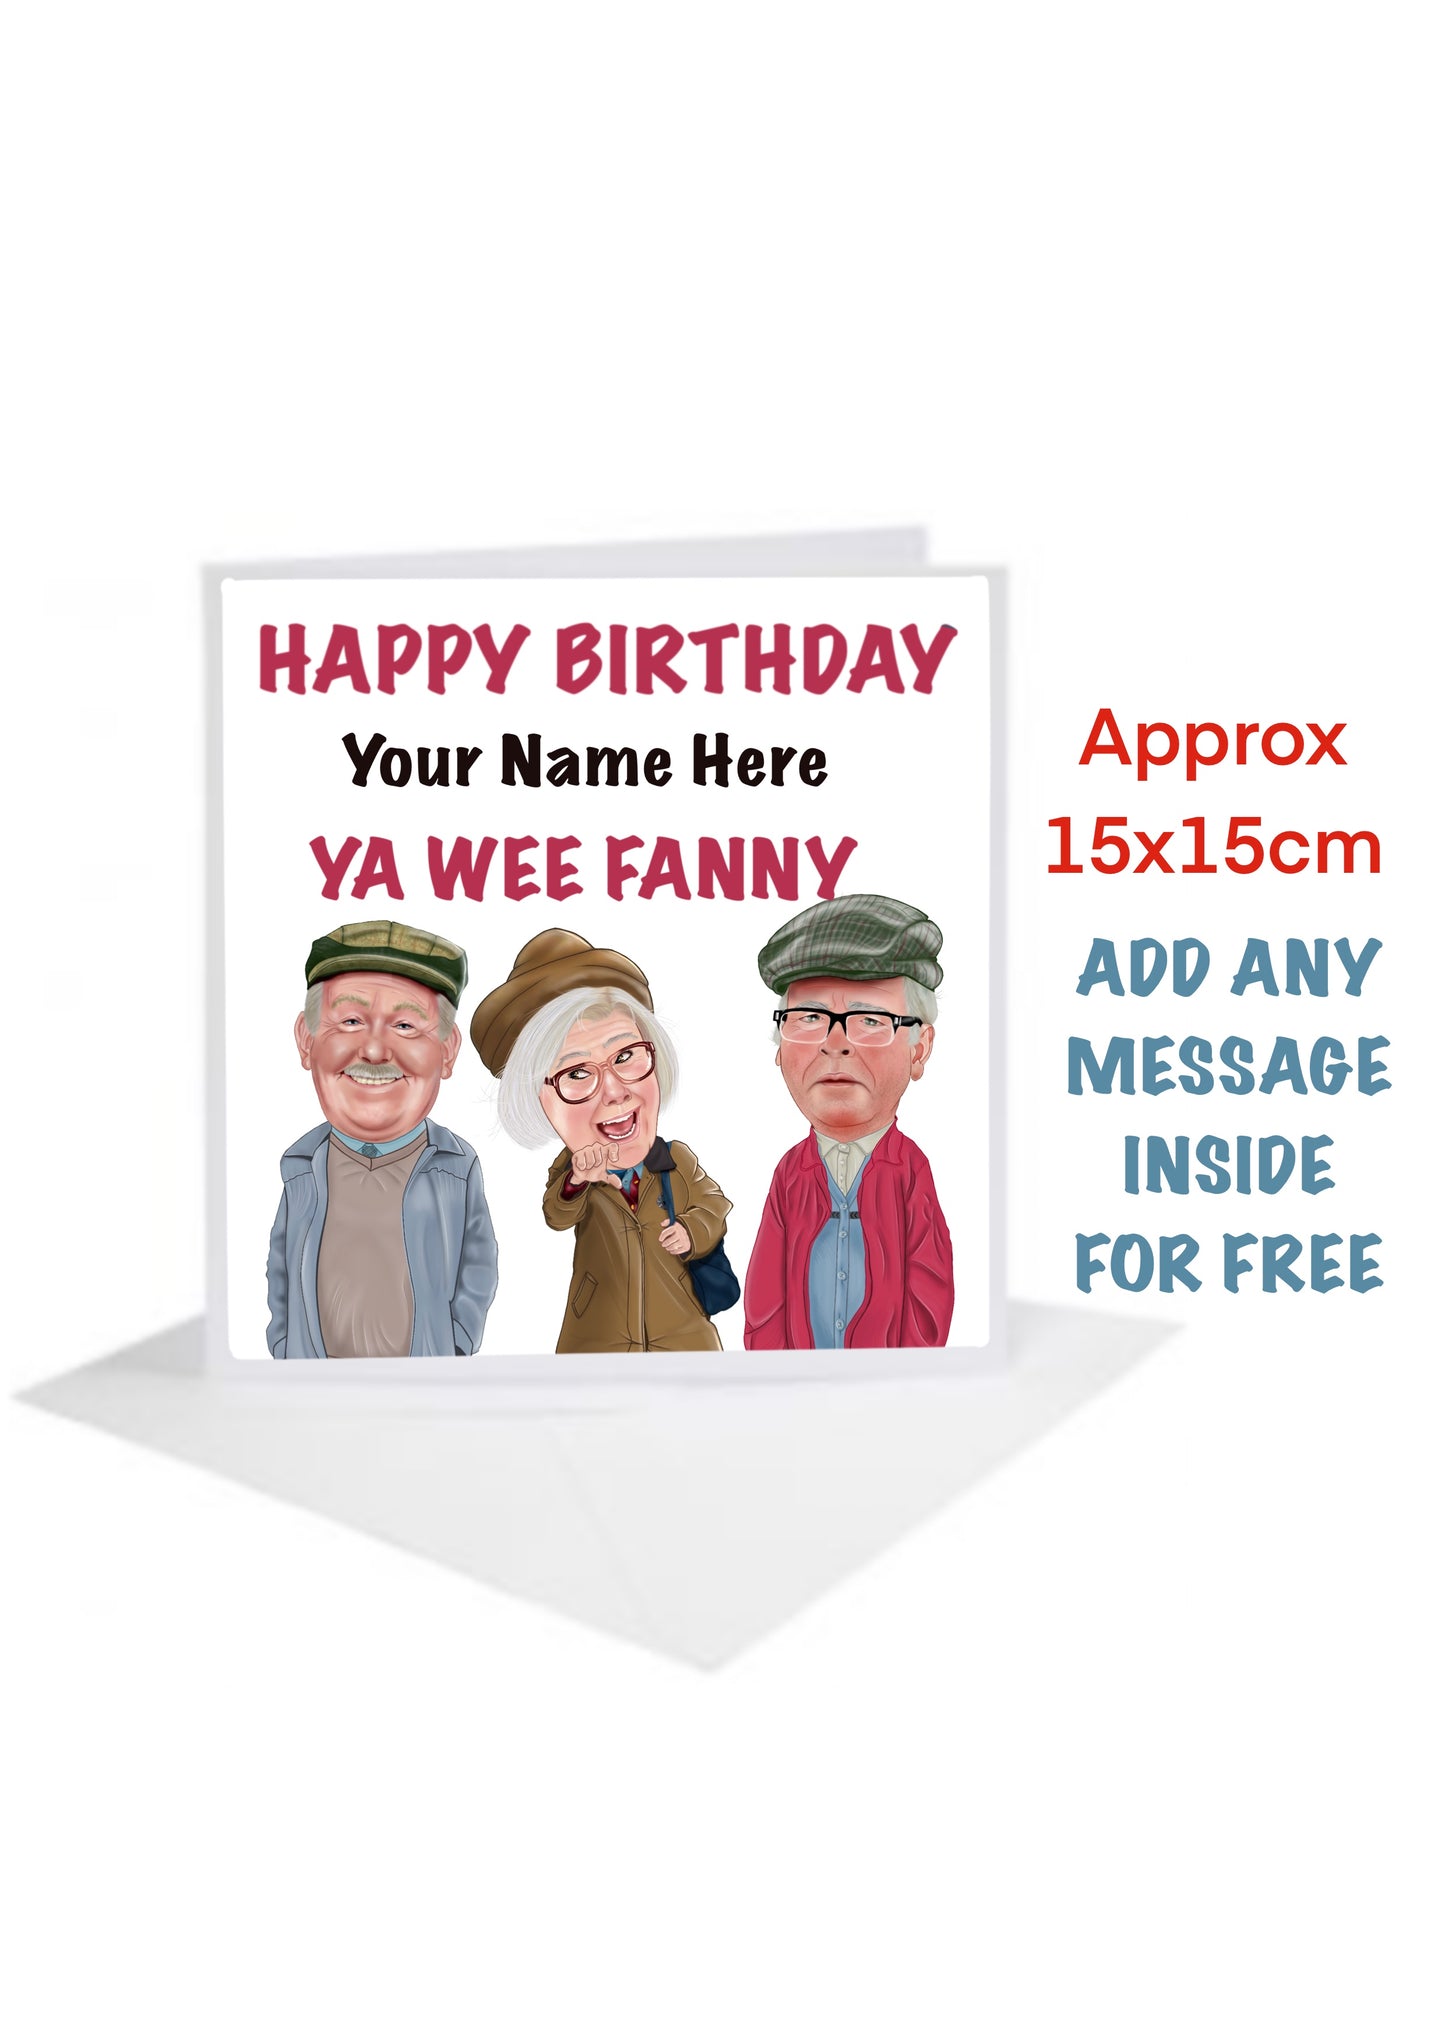 Still Game Birthday Cards auldpals cards Isa Drennan Winston jackjarvis esq